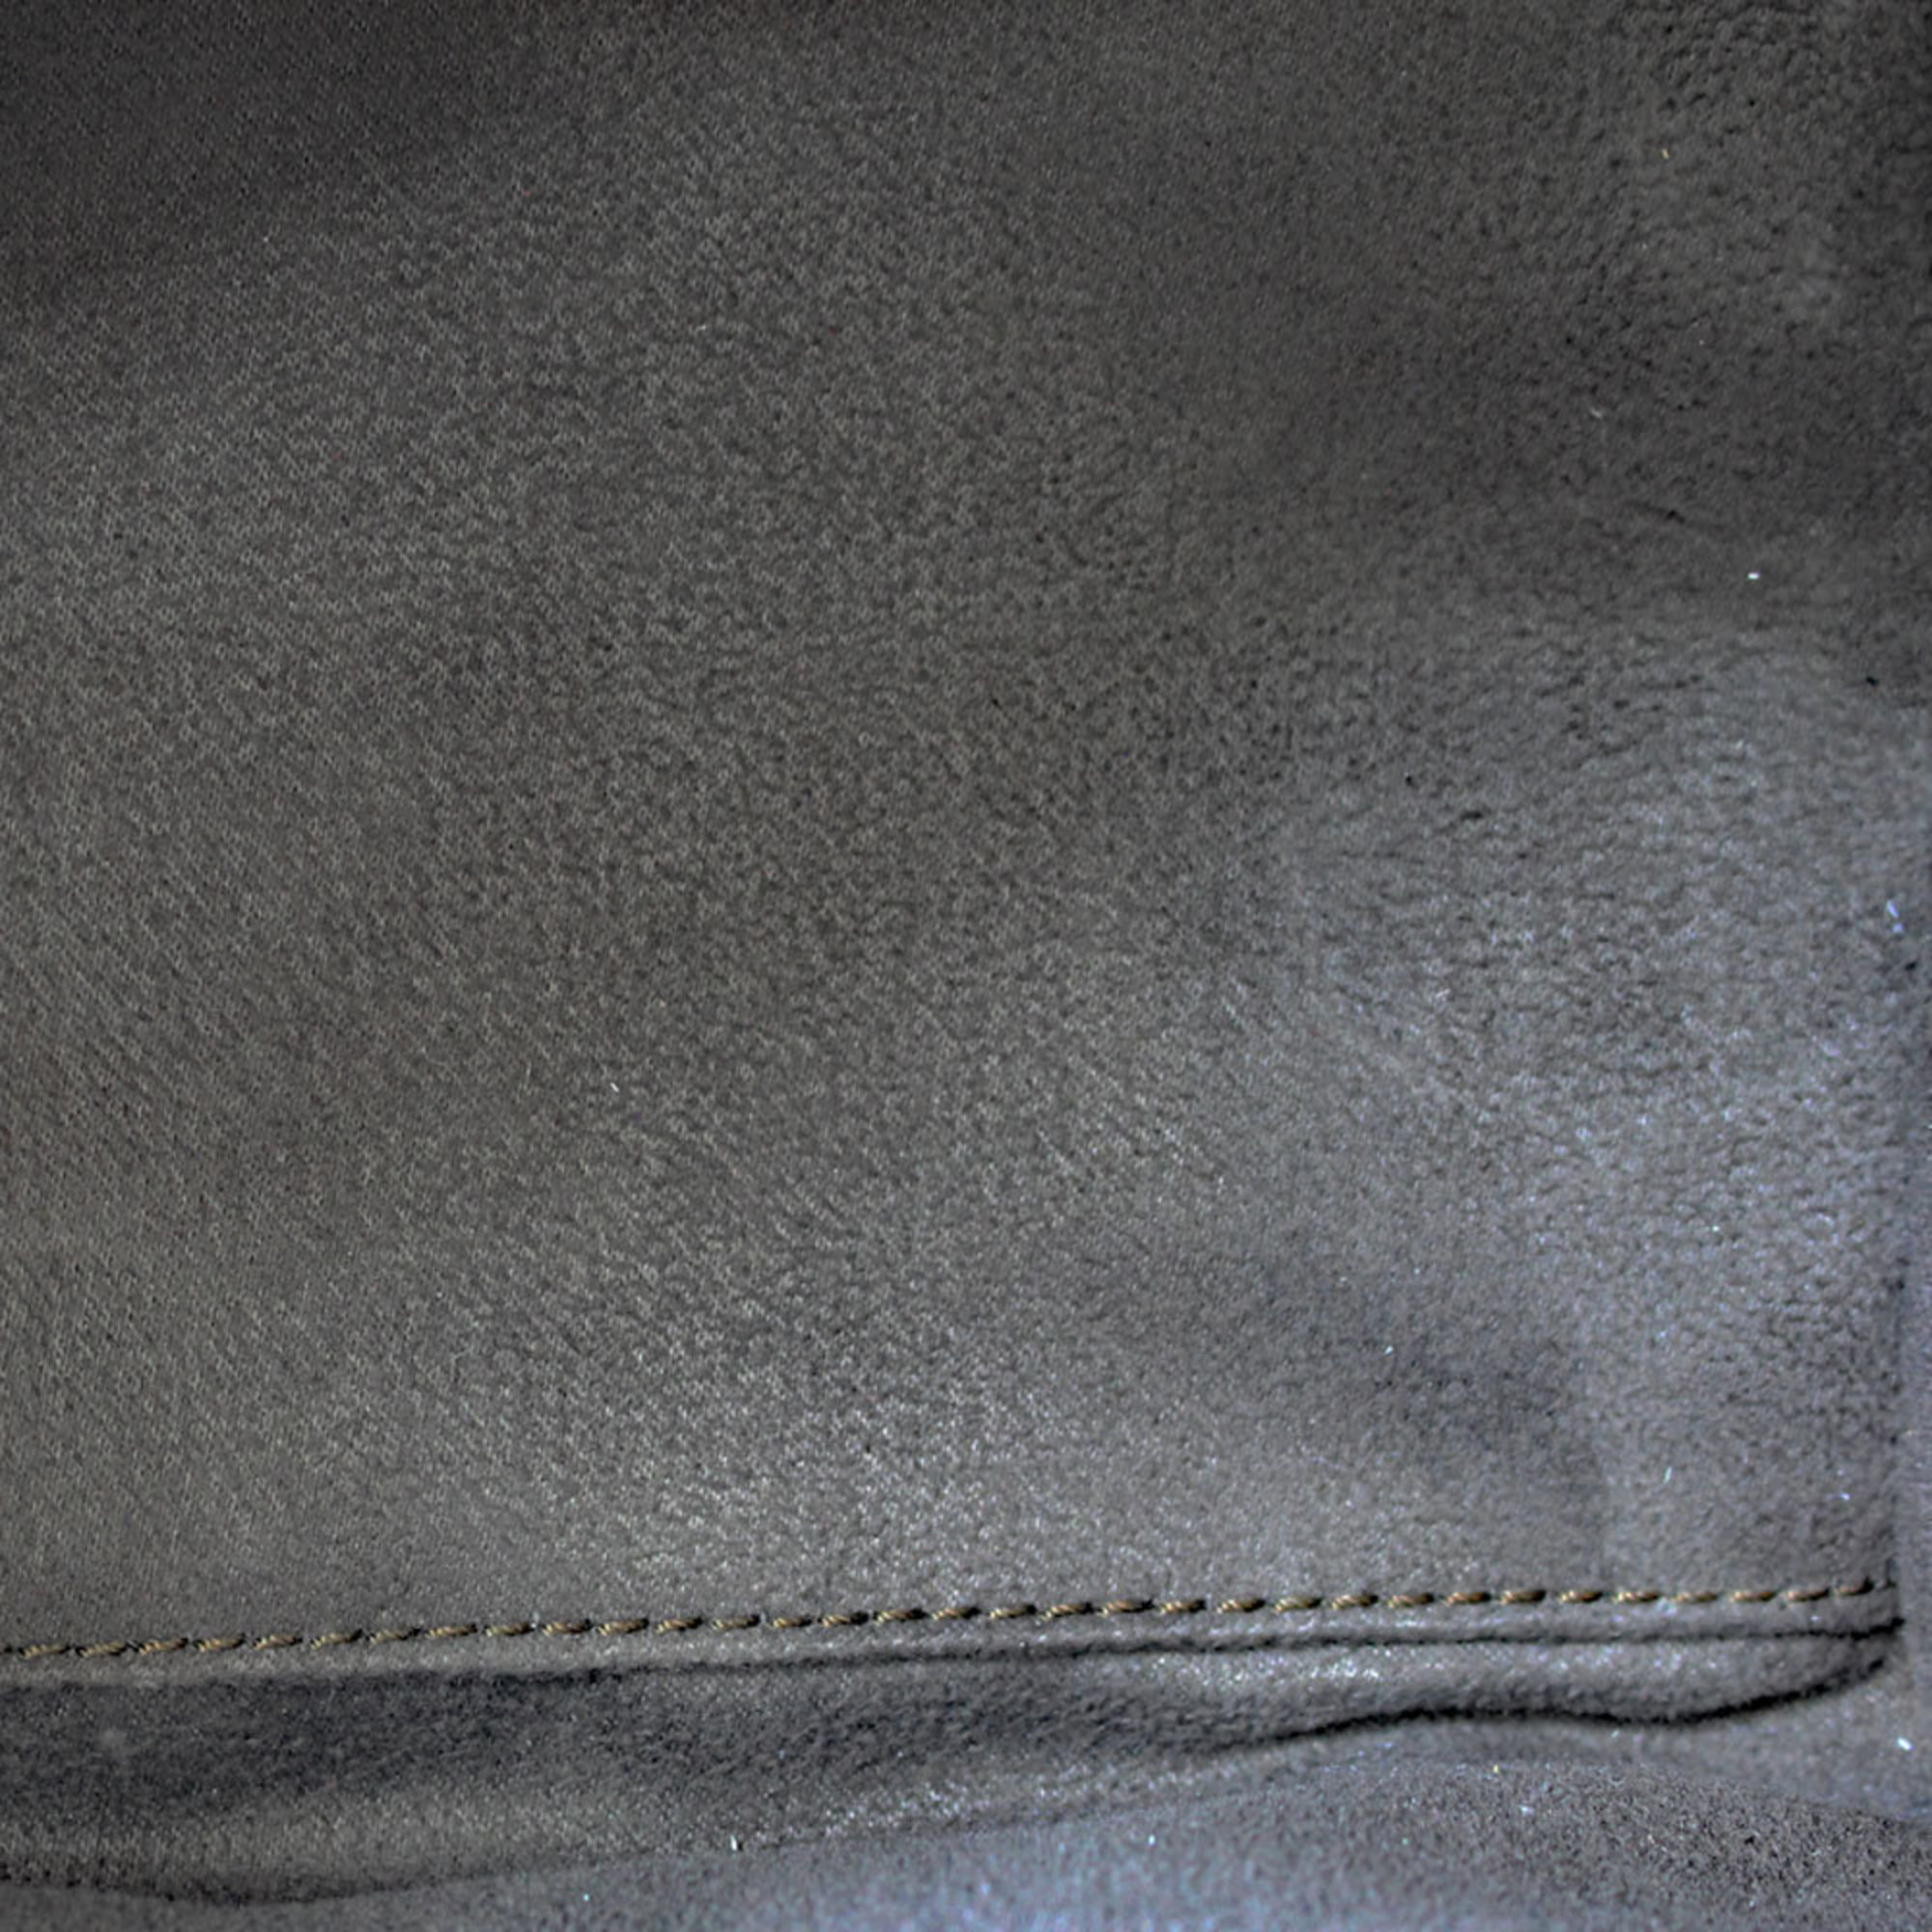 CELINE Celine Luggage Micro Handbag Gray Beige Women's Leather